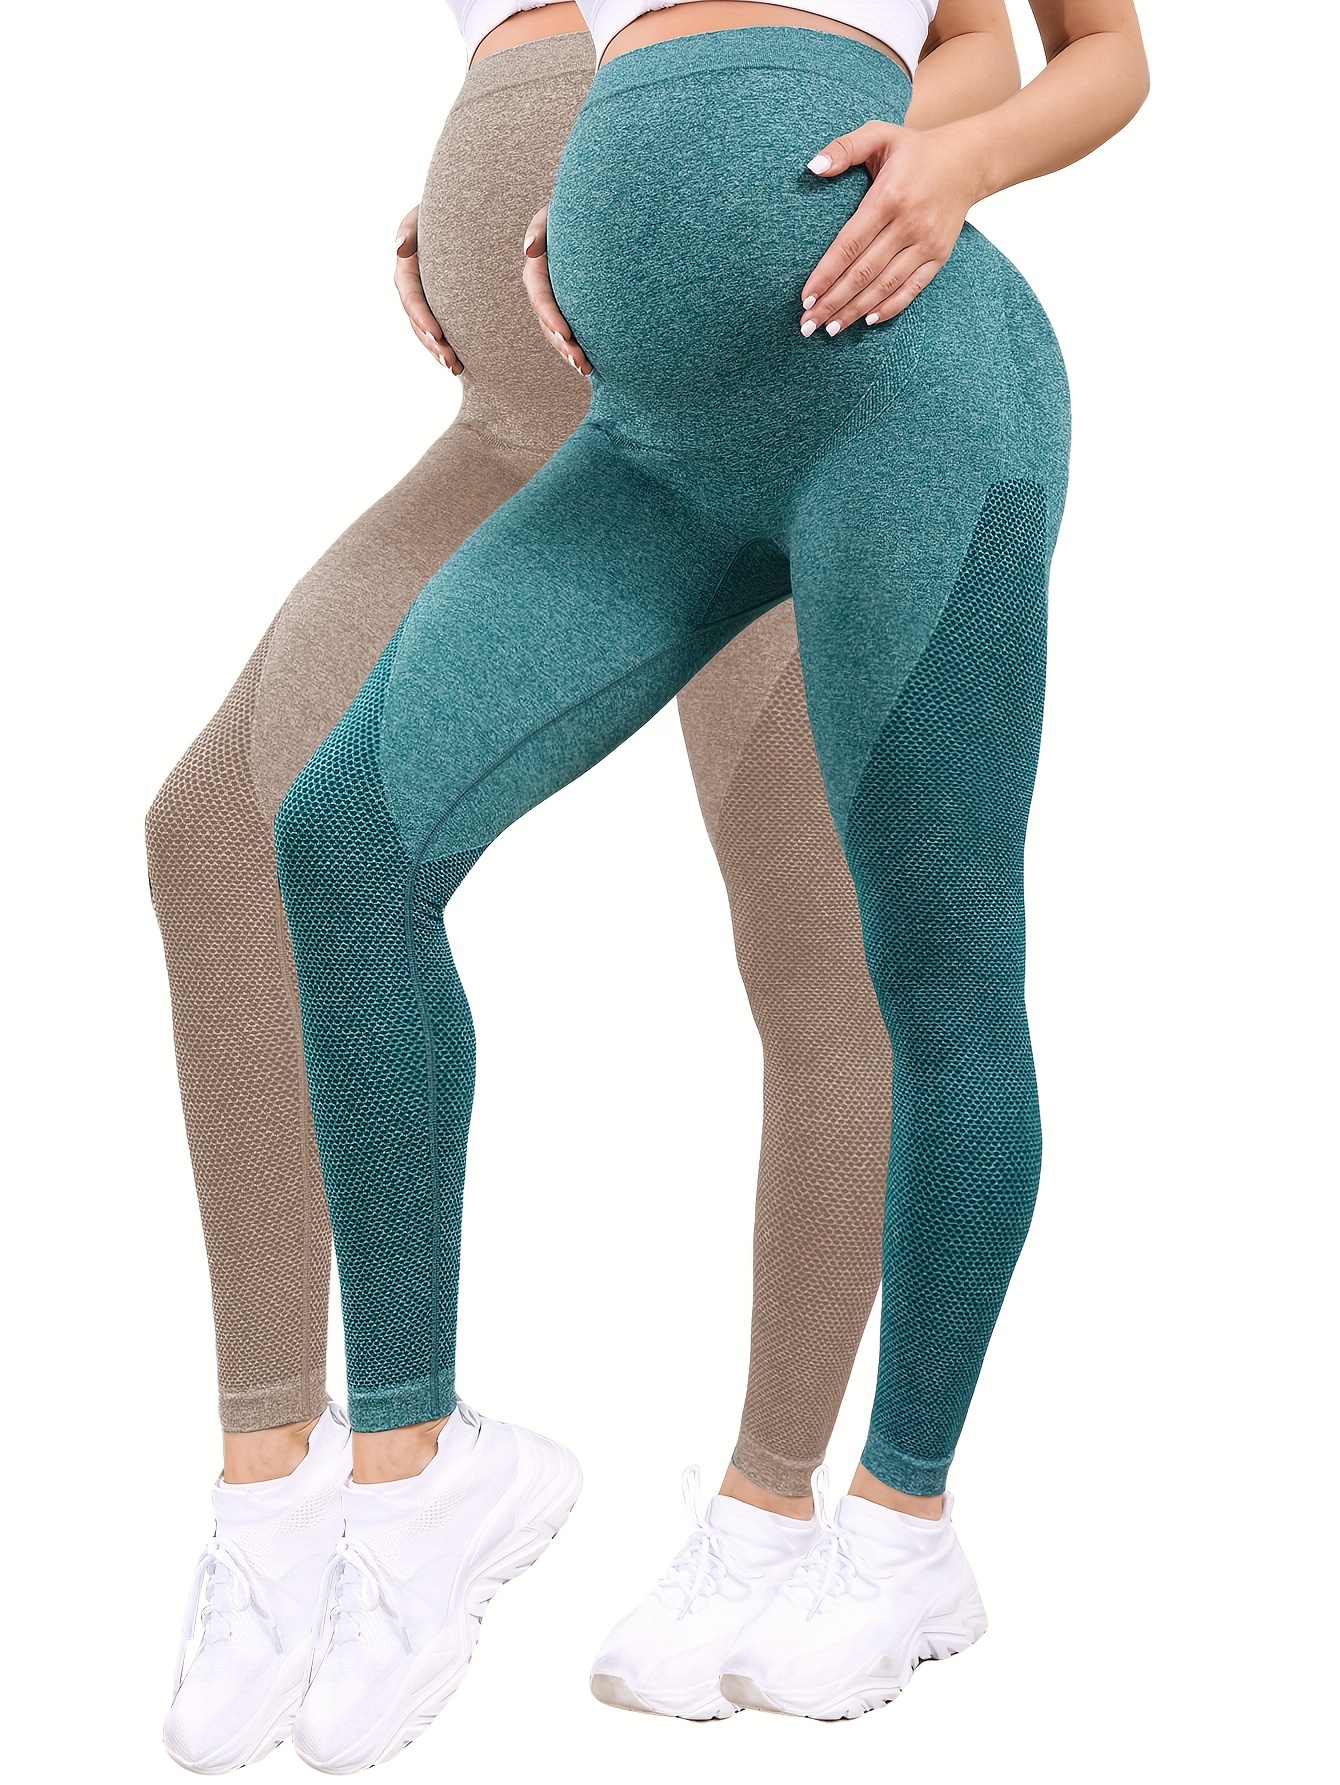 skpabo Leisure trousers for pregnant women, maternity leggings, pregnancy  trousers, comfortable stretch jogging bottoms 